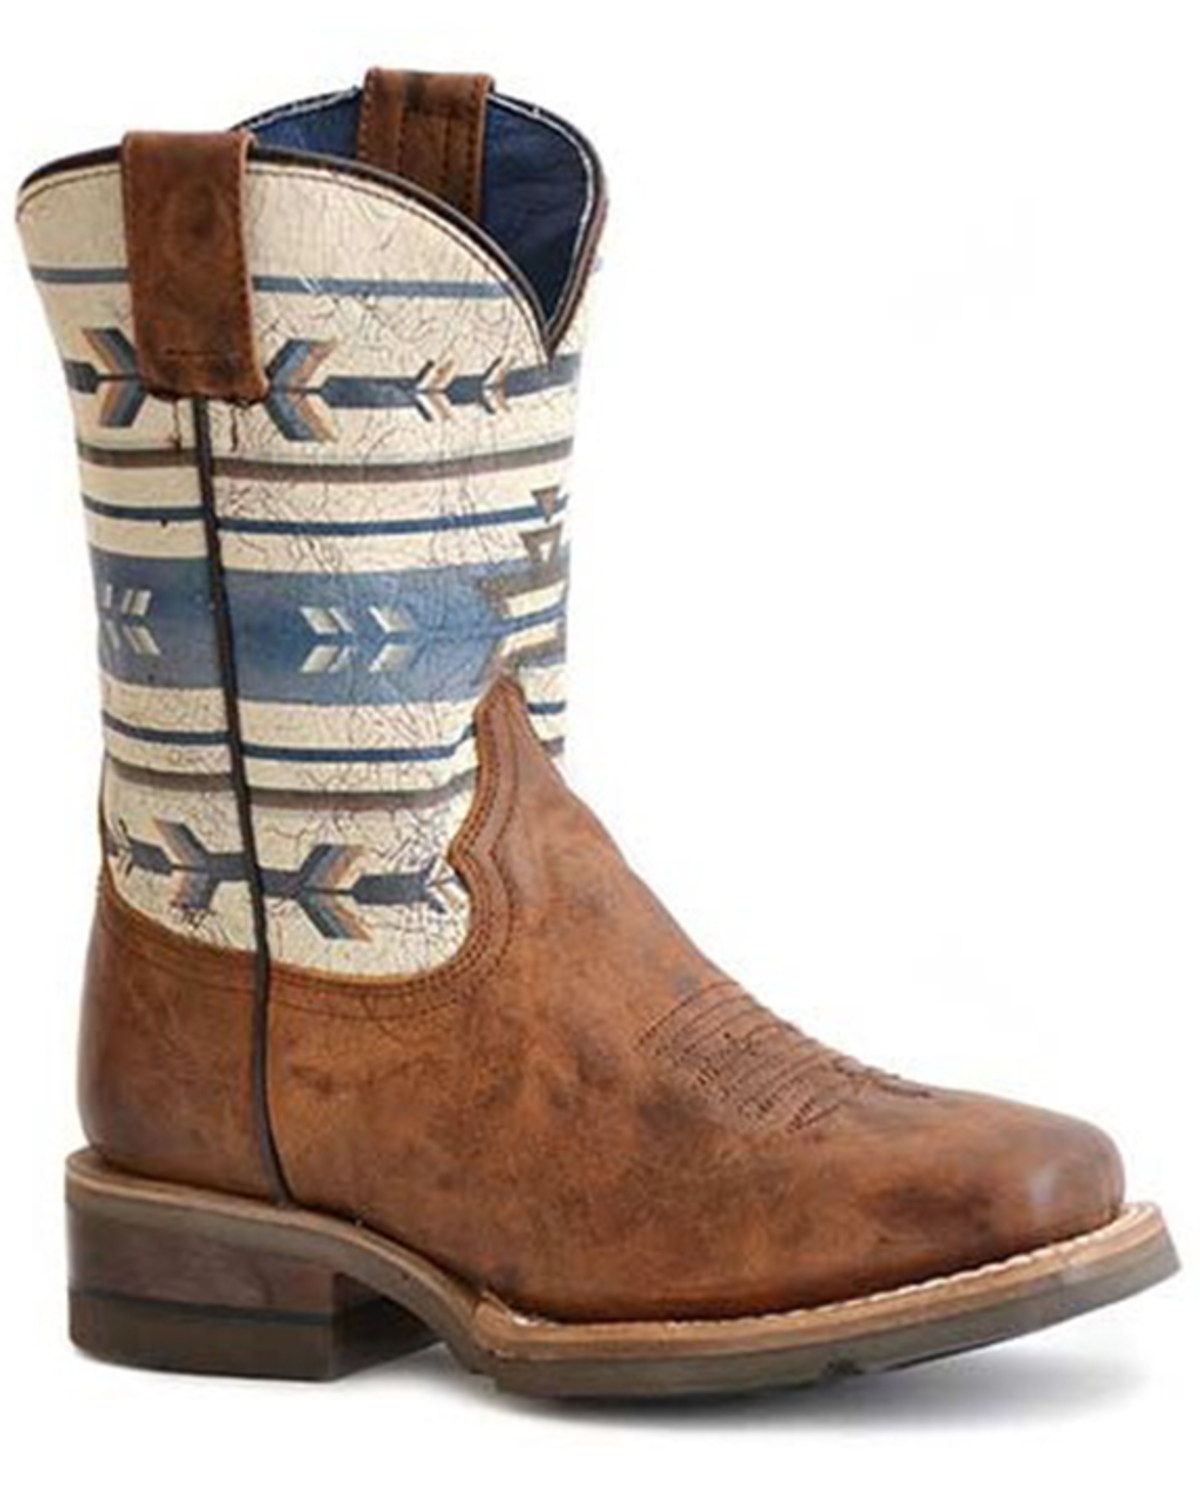 Roper Boys' Cowboy Southwestern Boots - Broad Square Toe